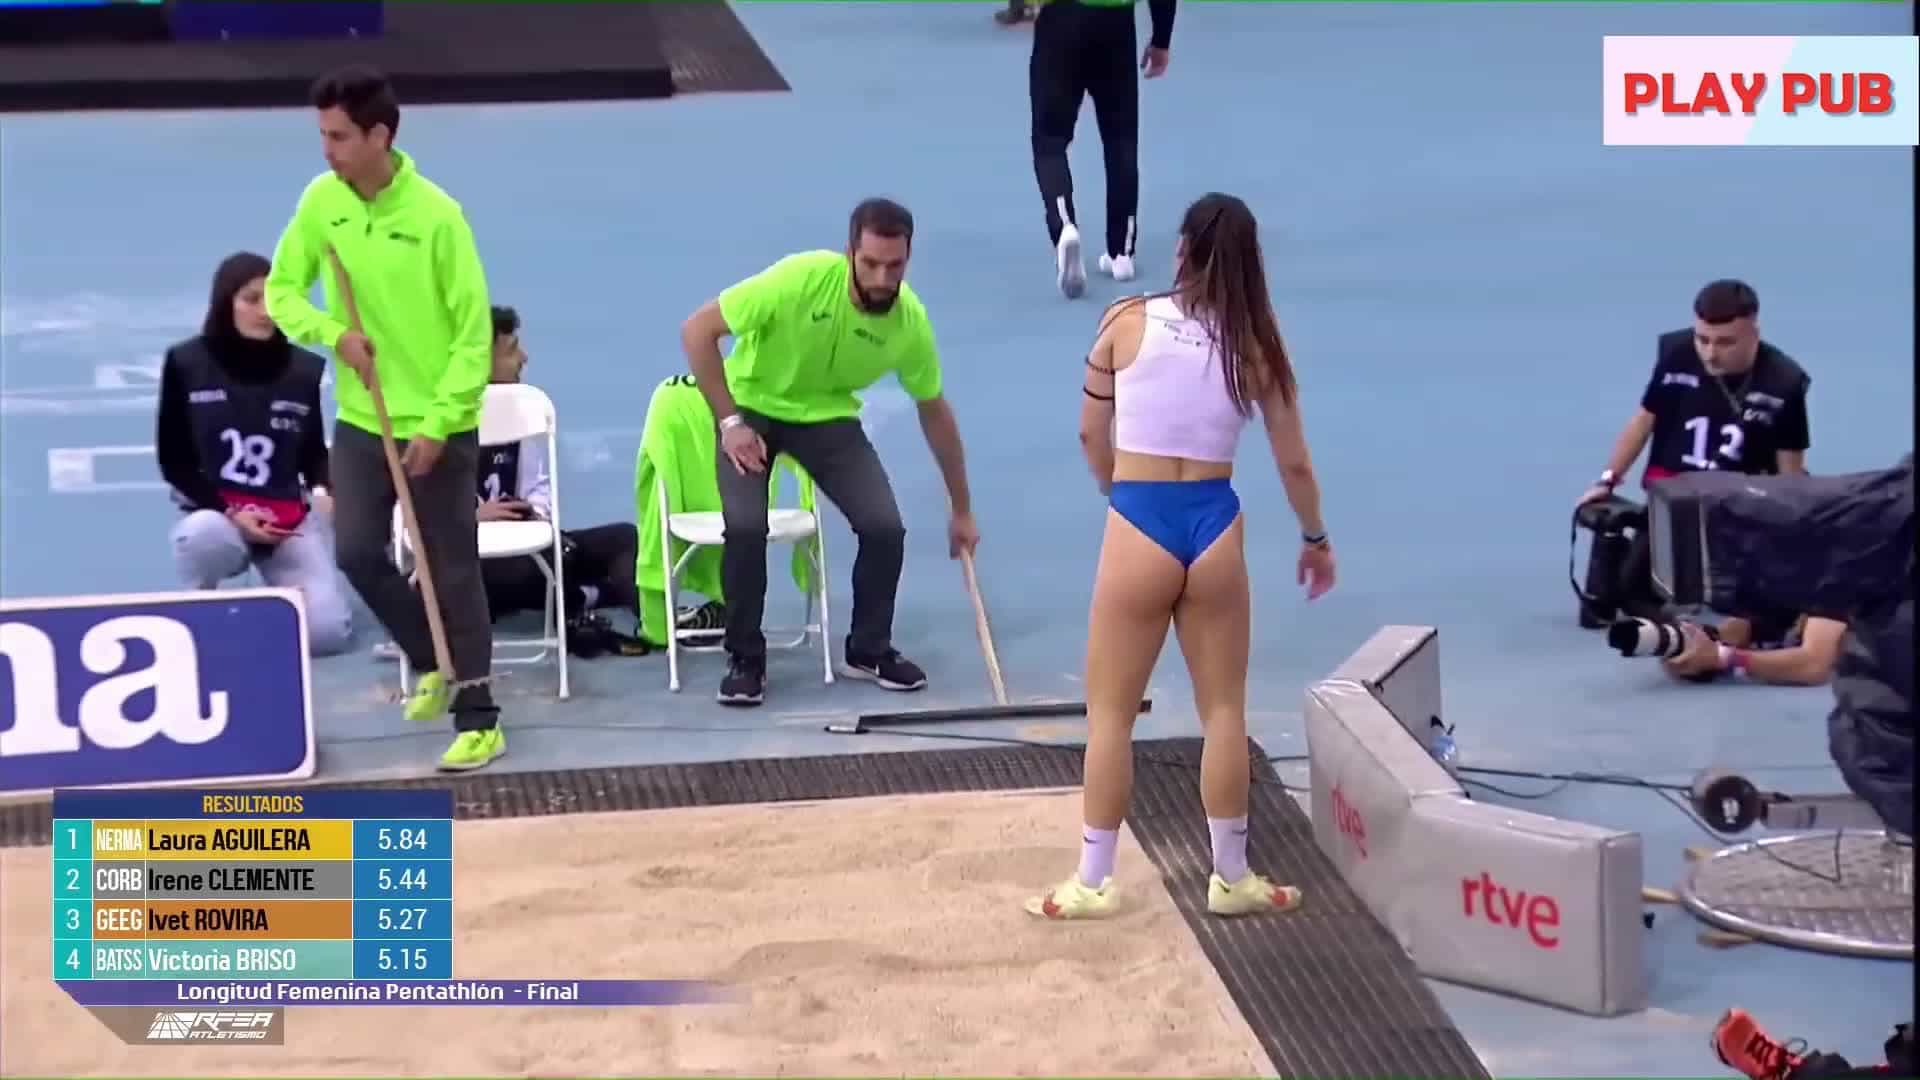 Sofia Cosculluela - Spanish heptathlete